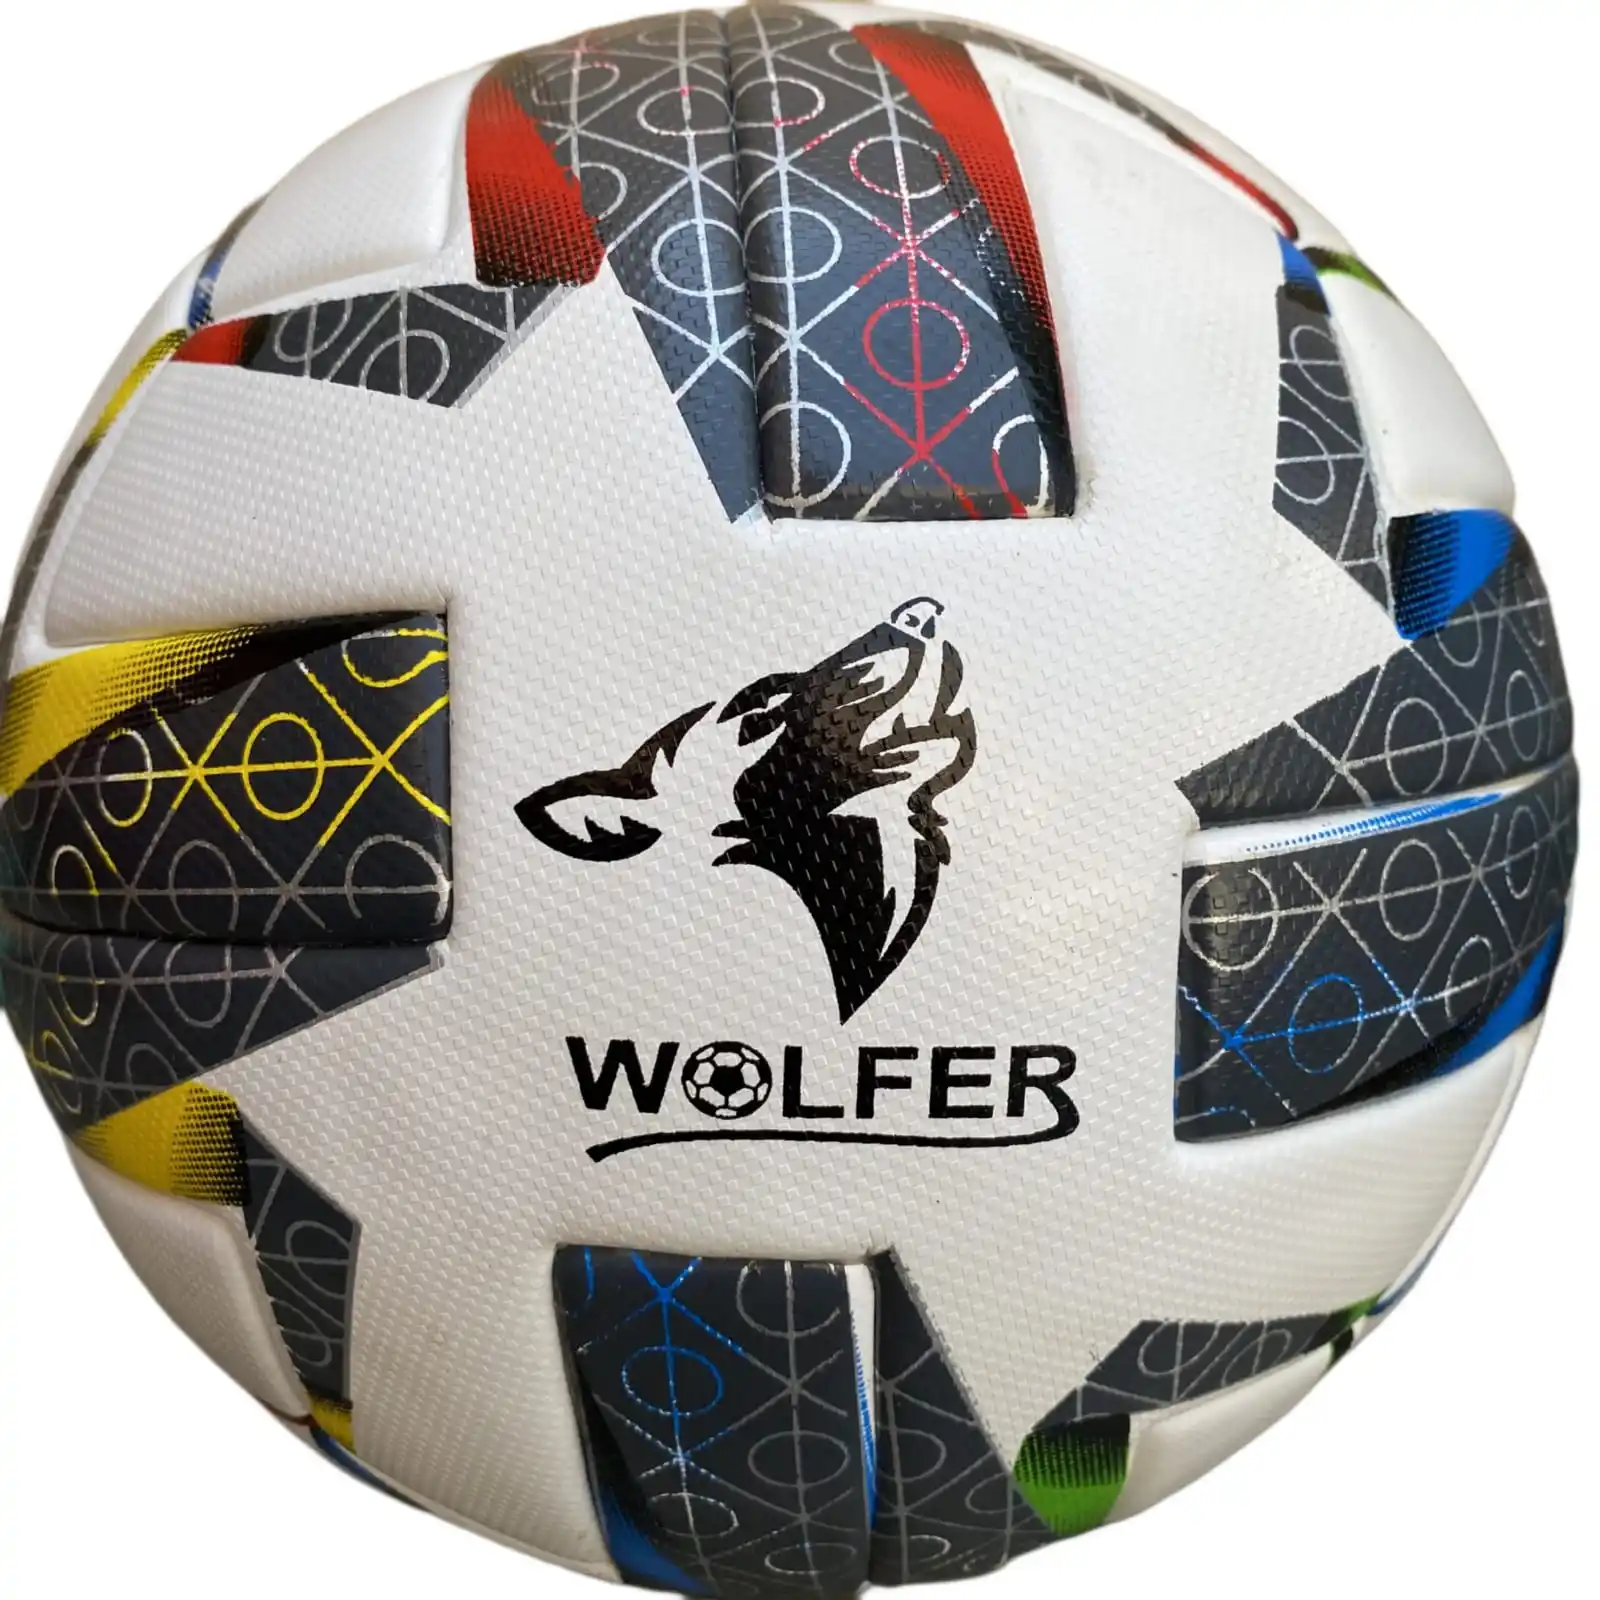 OEM ODM PU PVC Footballs Size 5 Thermo-bonded Soccer Ball Football Fully Customized Soccer Ball Team Football Ball